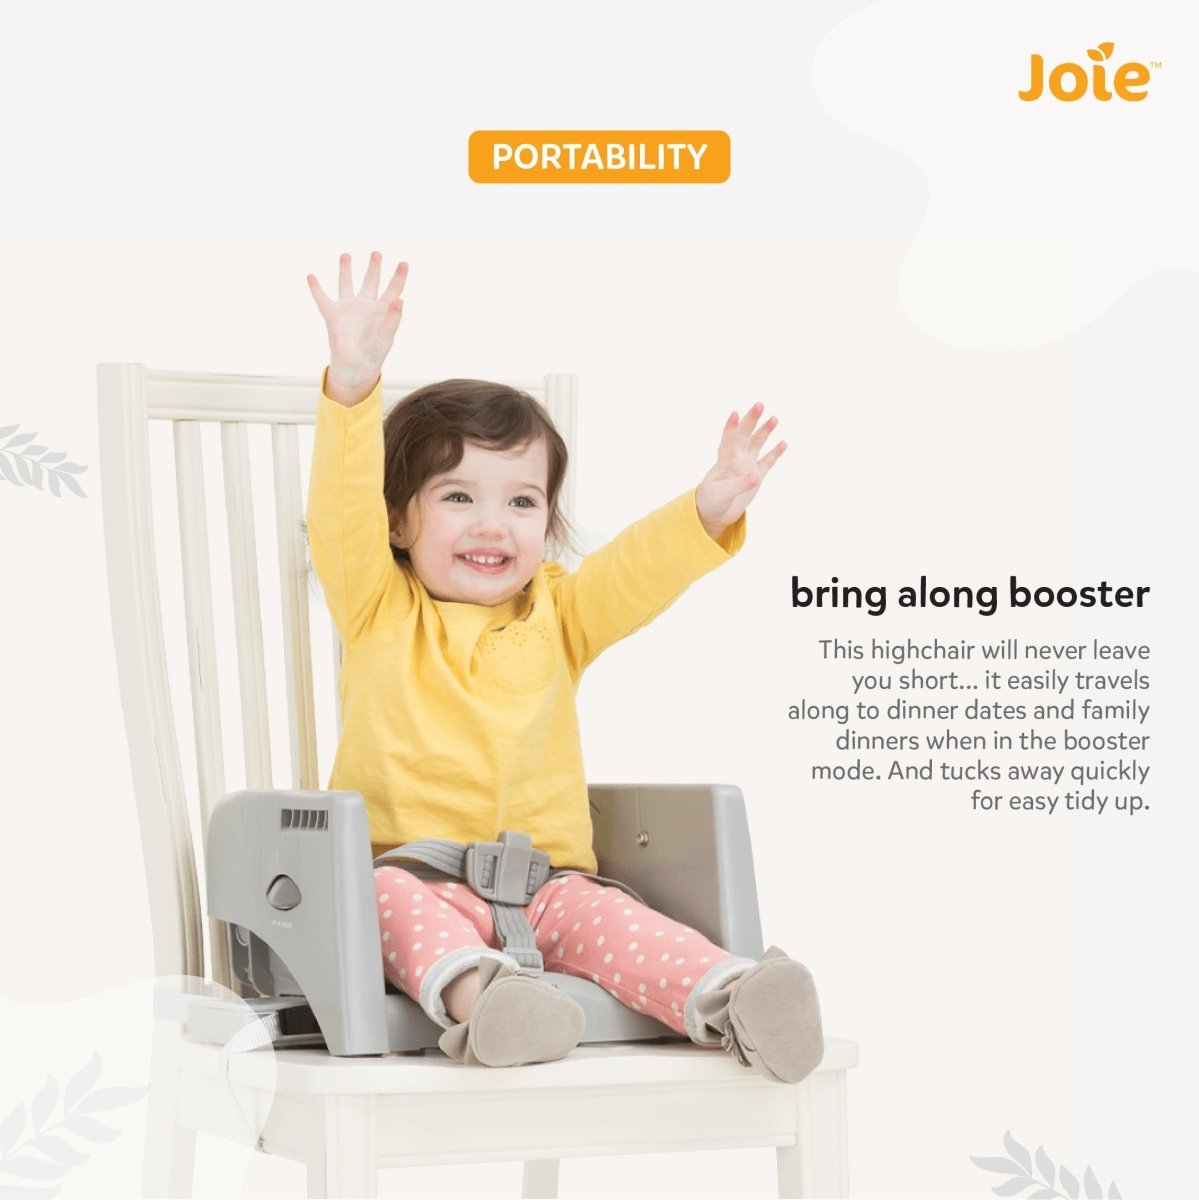 Joie Multiply 6 In 1 High Chair - Fern - H1605AAFRN000